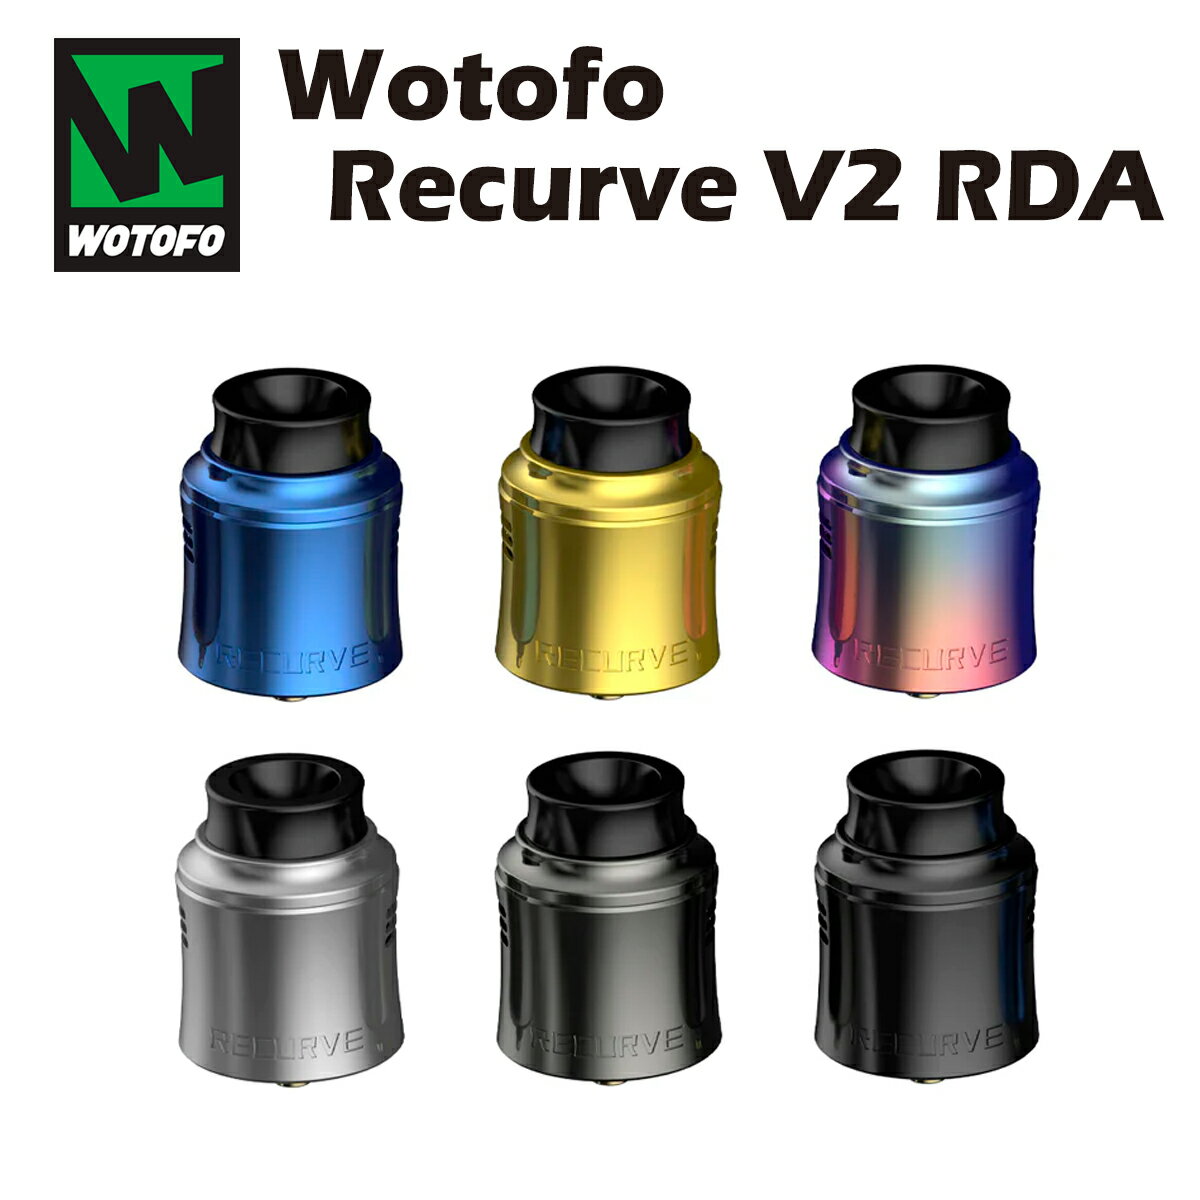 Wotofo Recurve V2 RDA アトマイザー スコンカー対応 ドリッパー リビルダブル ウォトフォ リカーブ 電子タバコ 電子…